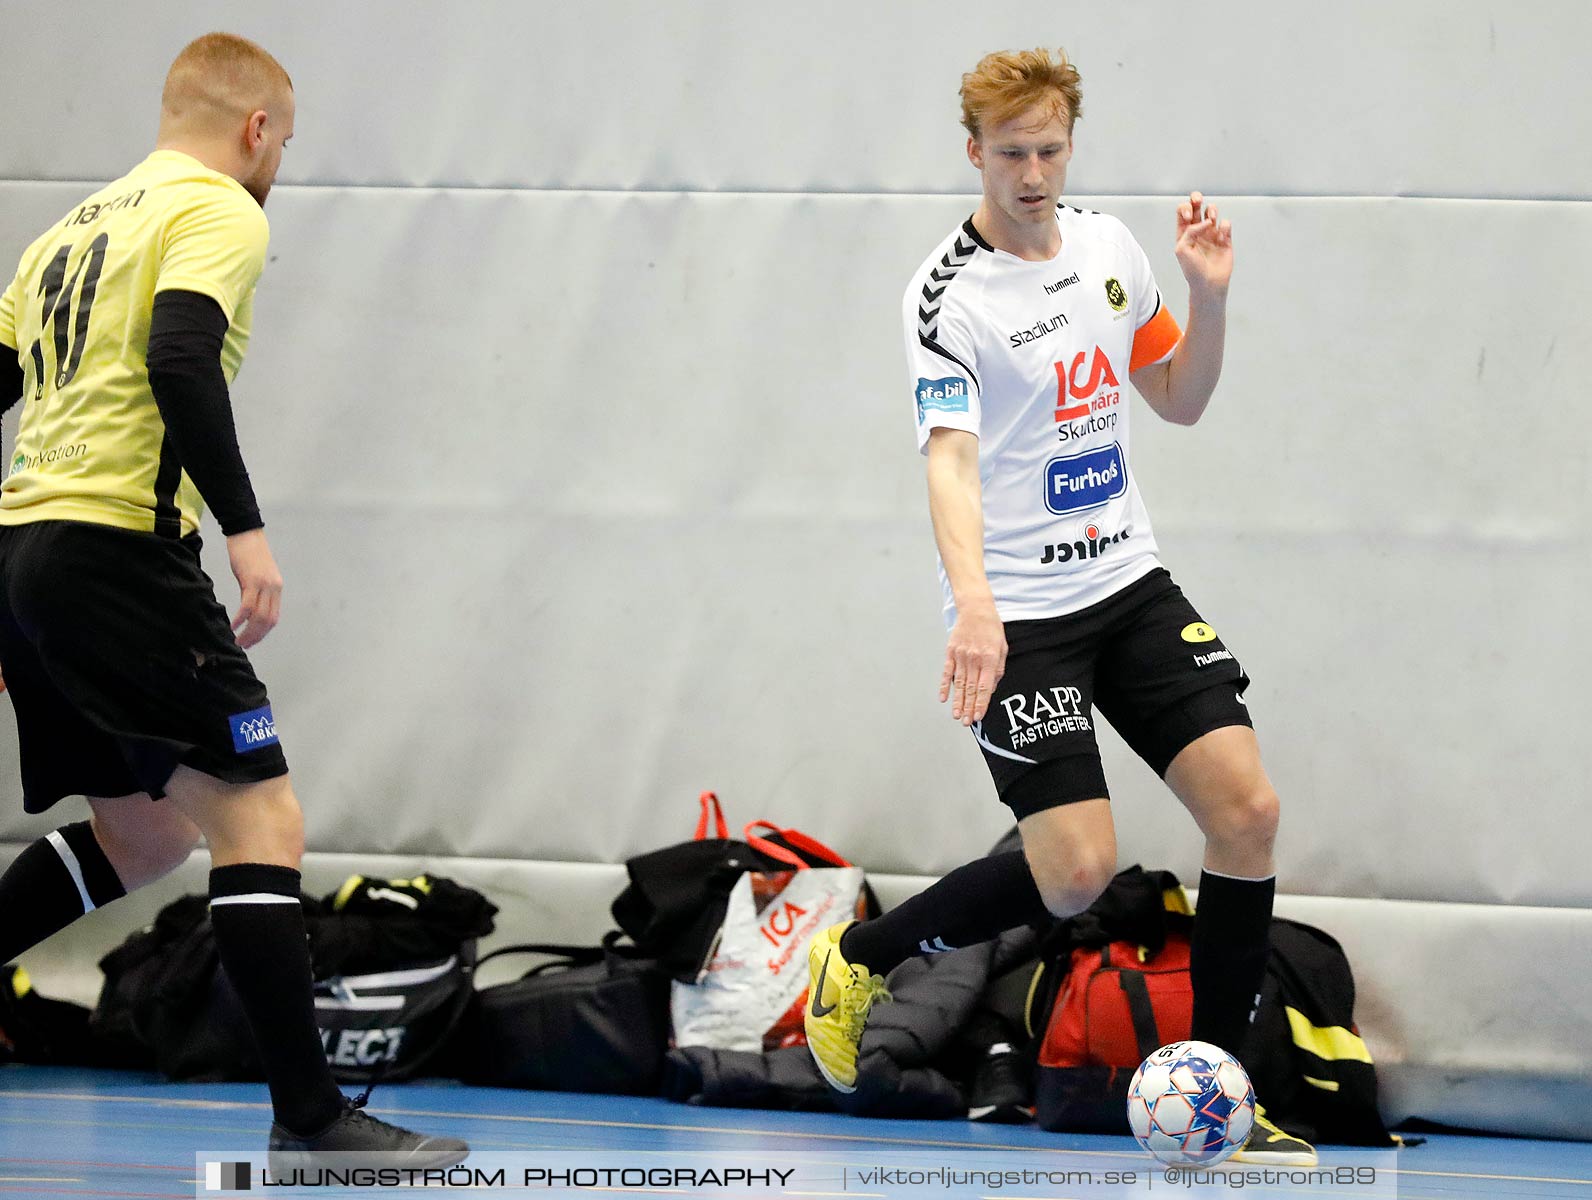 Skövde Futsalcup 2019 Herrar Elastico Futsal Club-Skultorps IF,herr,Arena Skövde,Skövde,Sverige,Futsal,,2019,227316